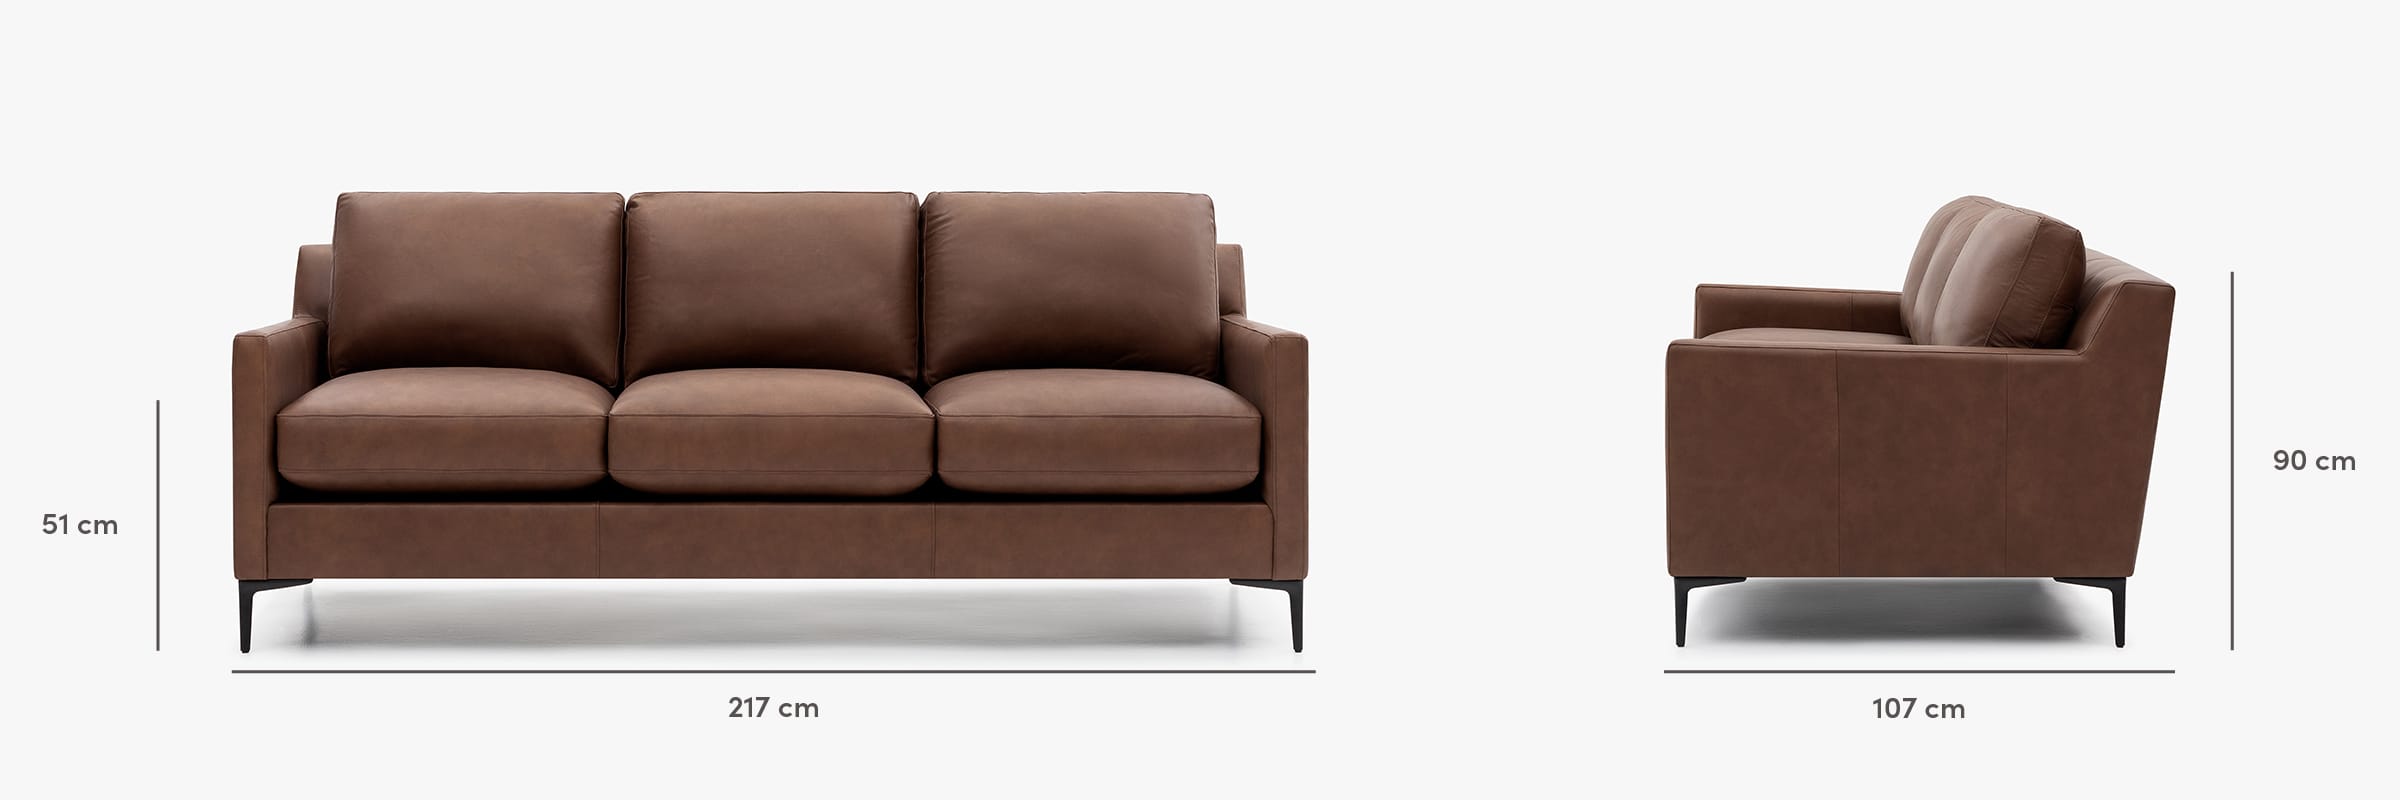 Kennedy sofa leather - dimensions